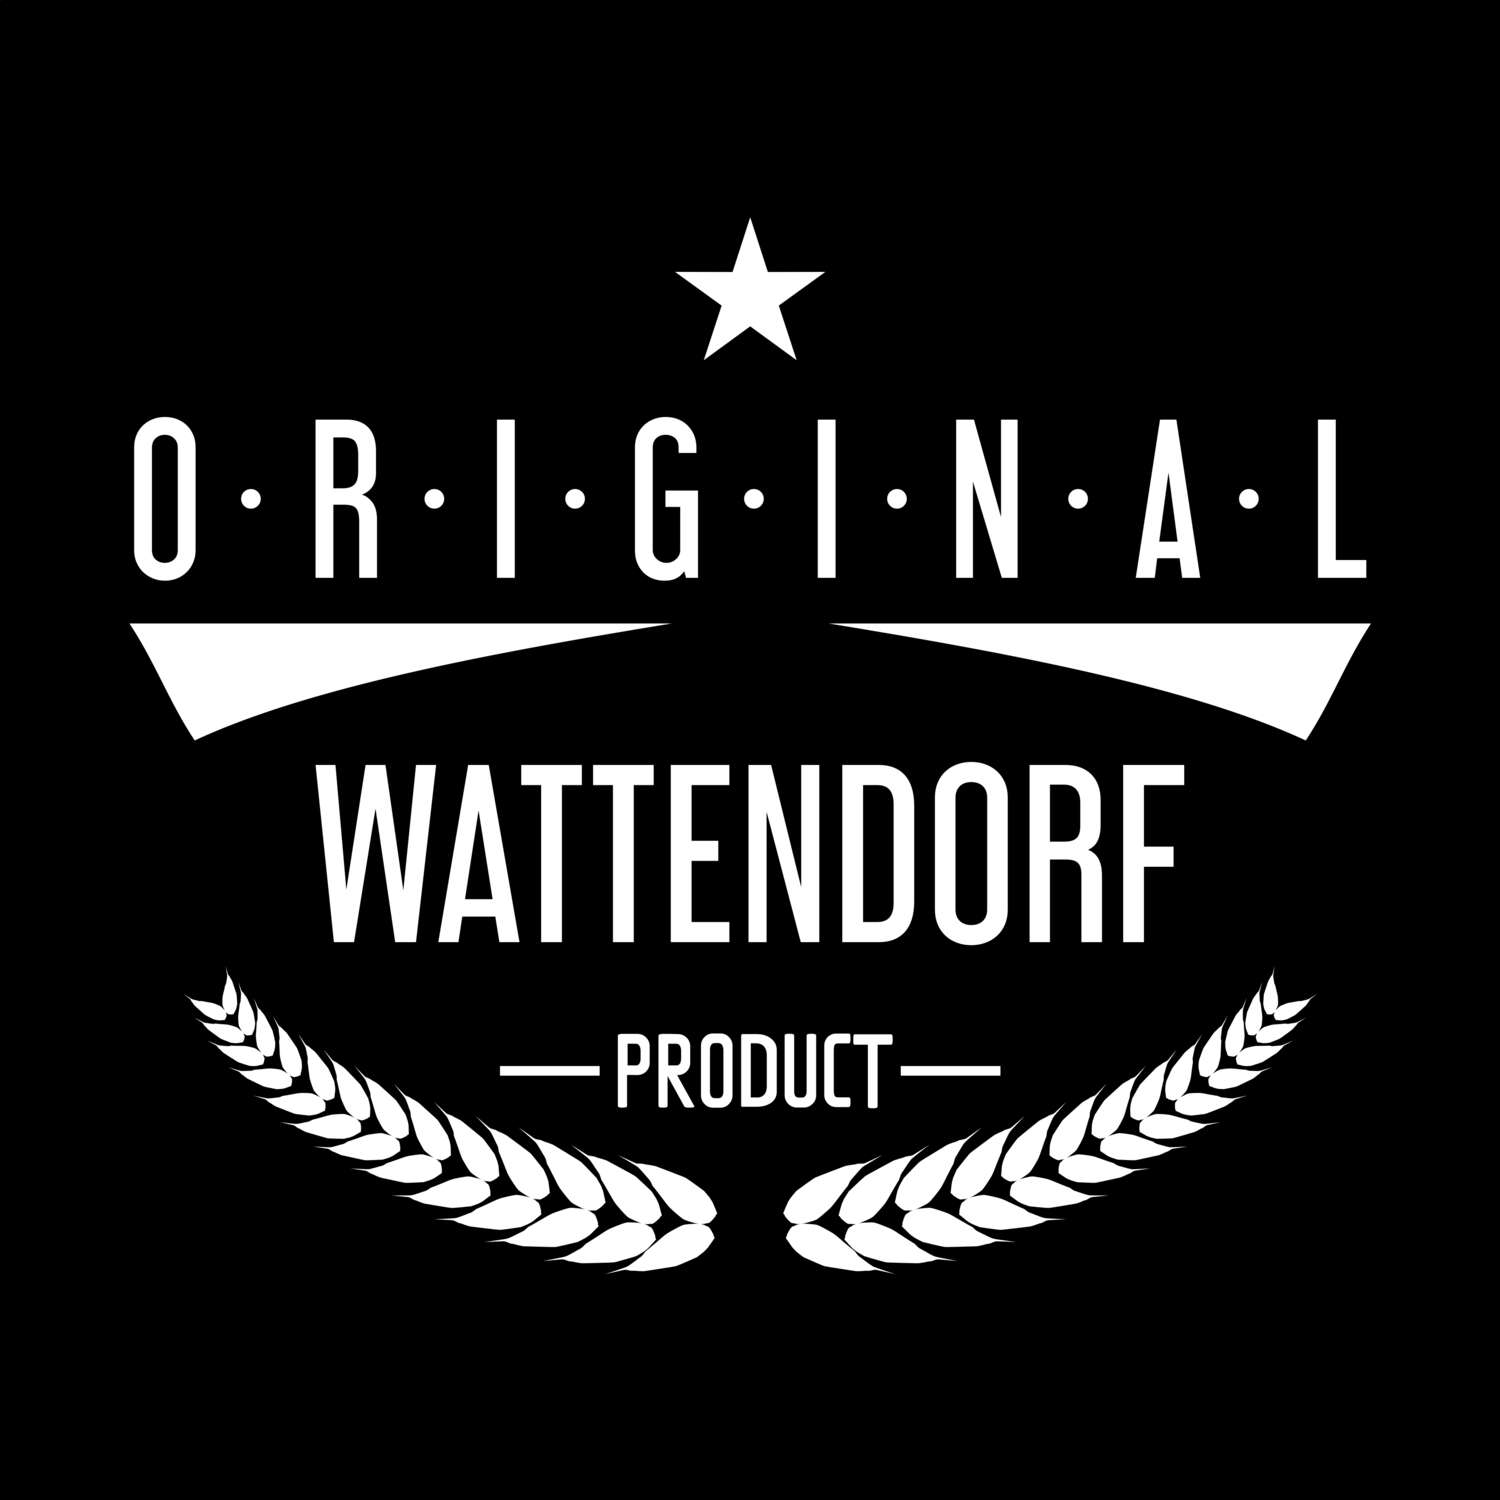 Wattendorf T-Shirt »Original Product«